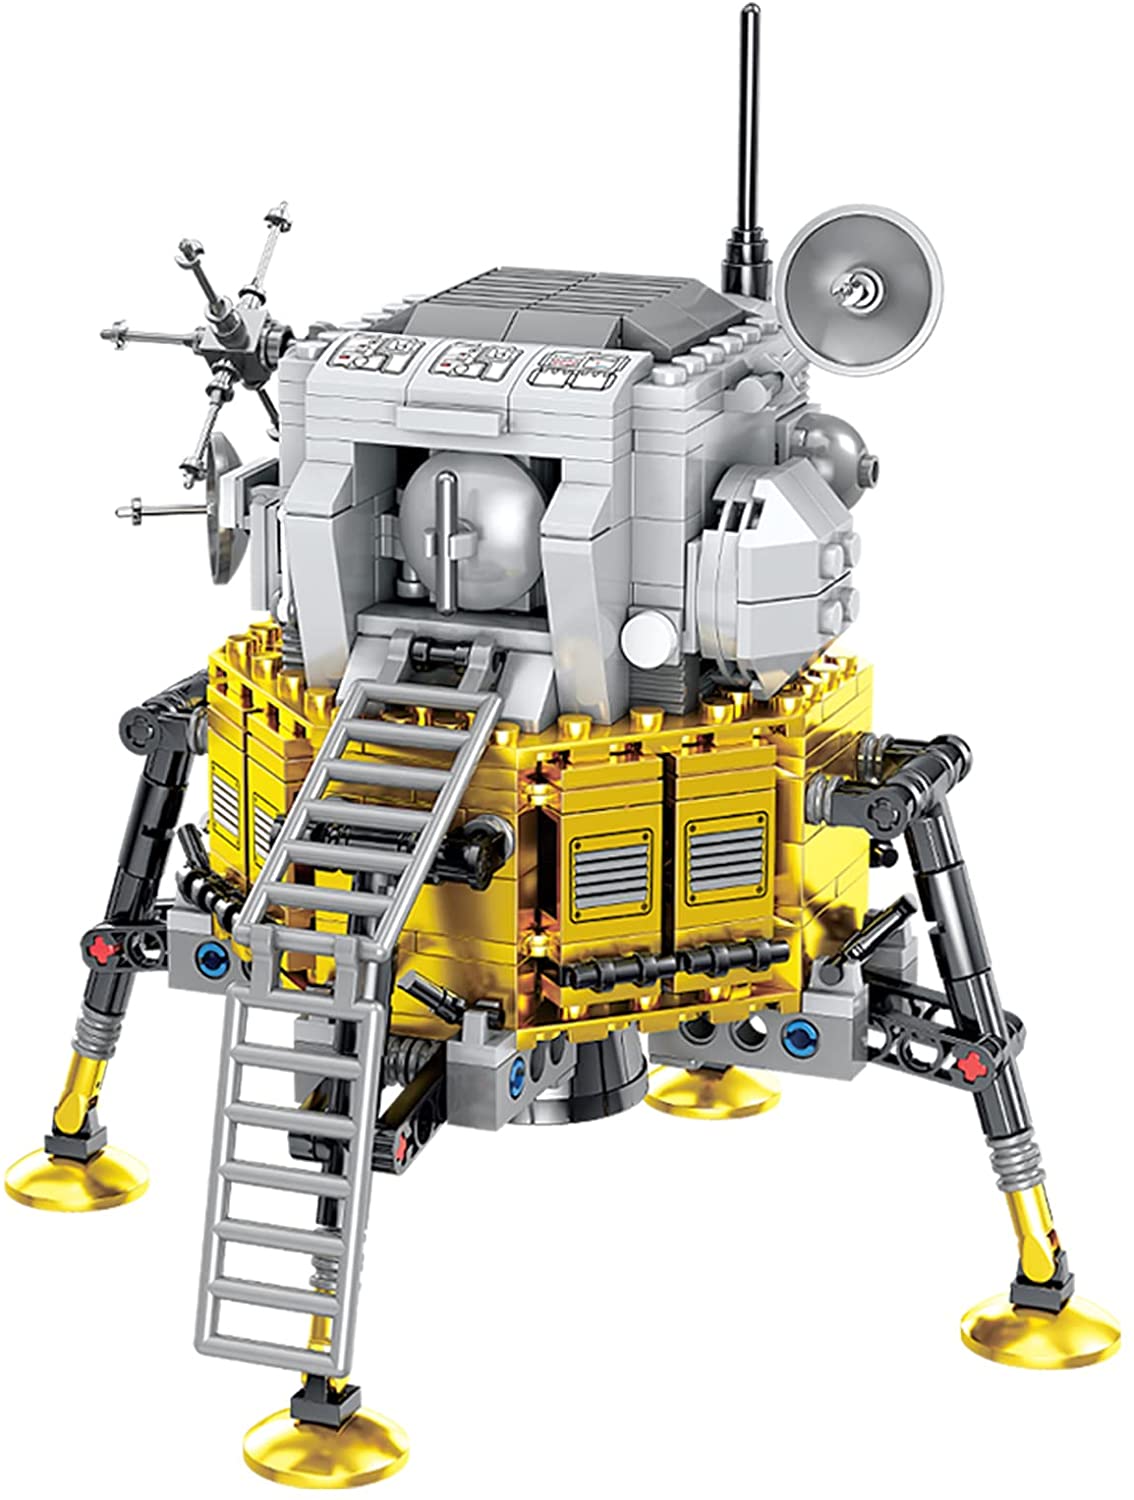 QLT Lunar Lander Space Building Kit 447 Piece Compatible with Lego Sets Creator Expert NASA Building Blocks Model for Boys Adults 6 7 8 9 10 11 12 